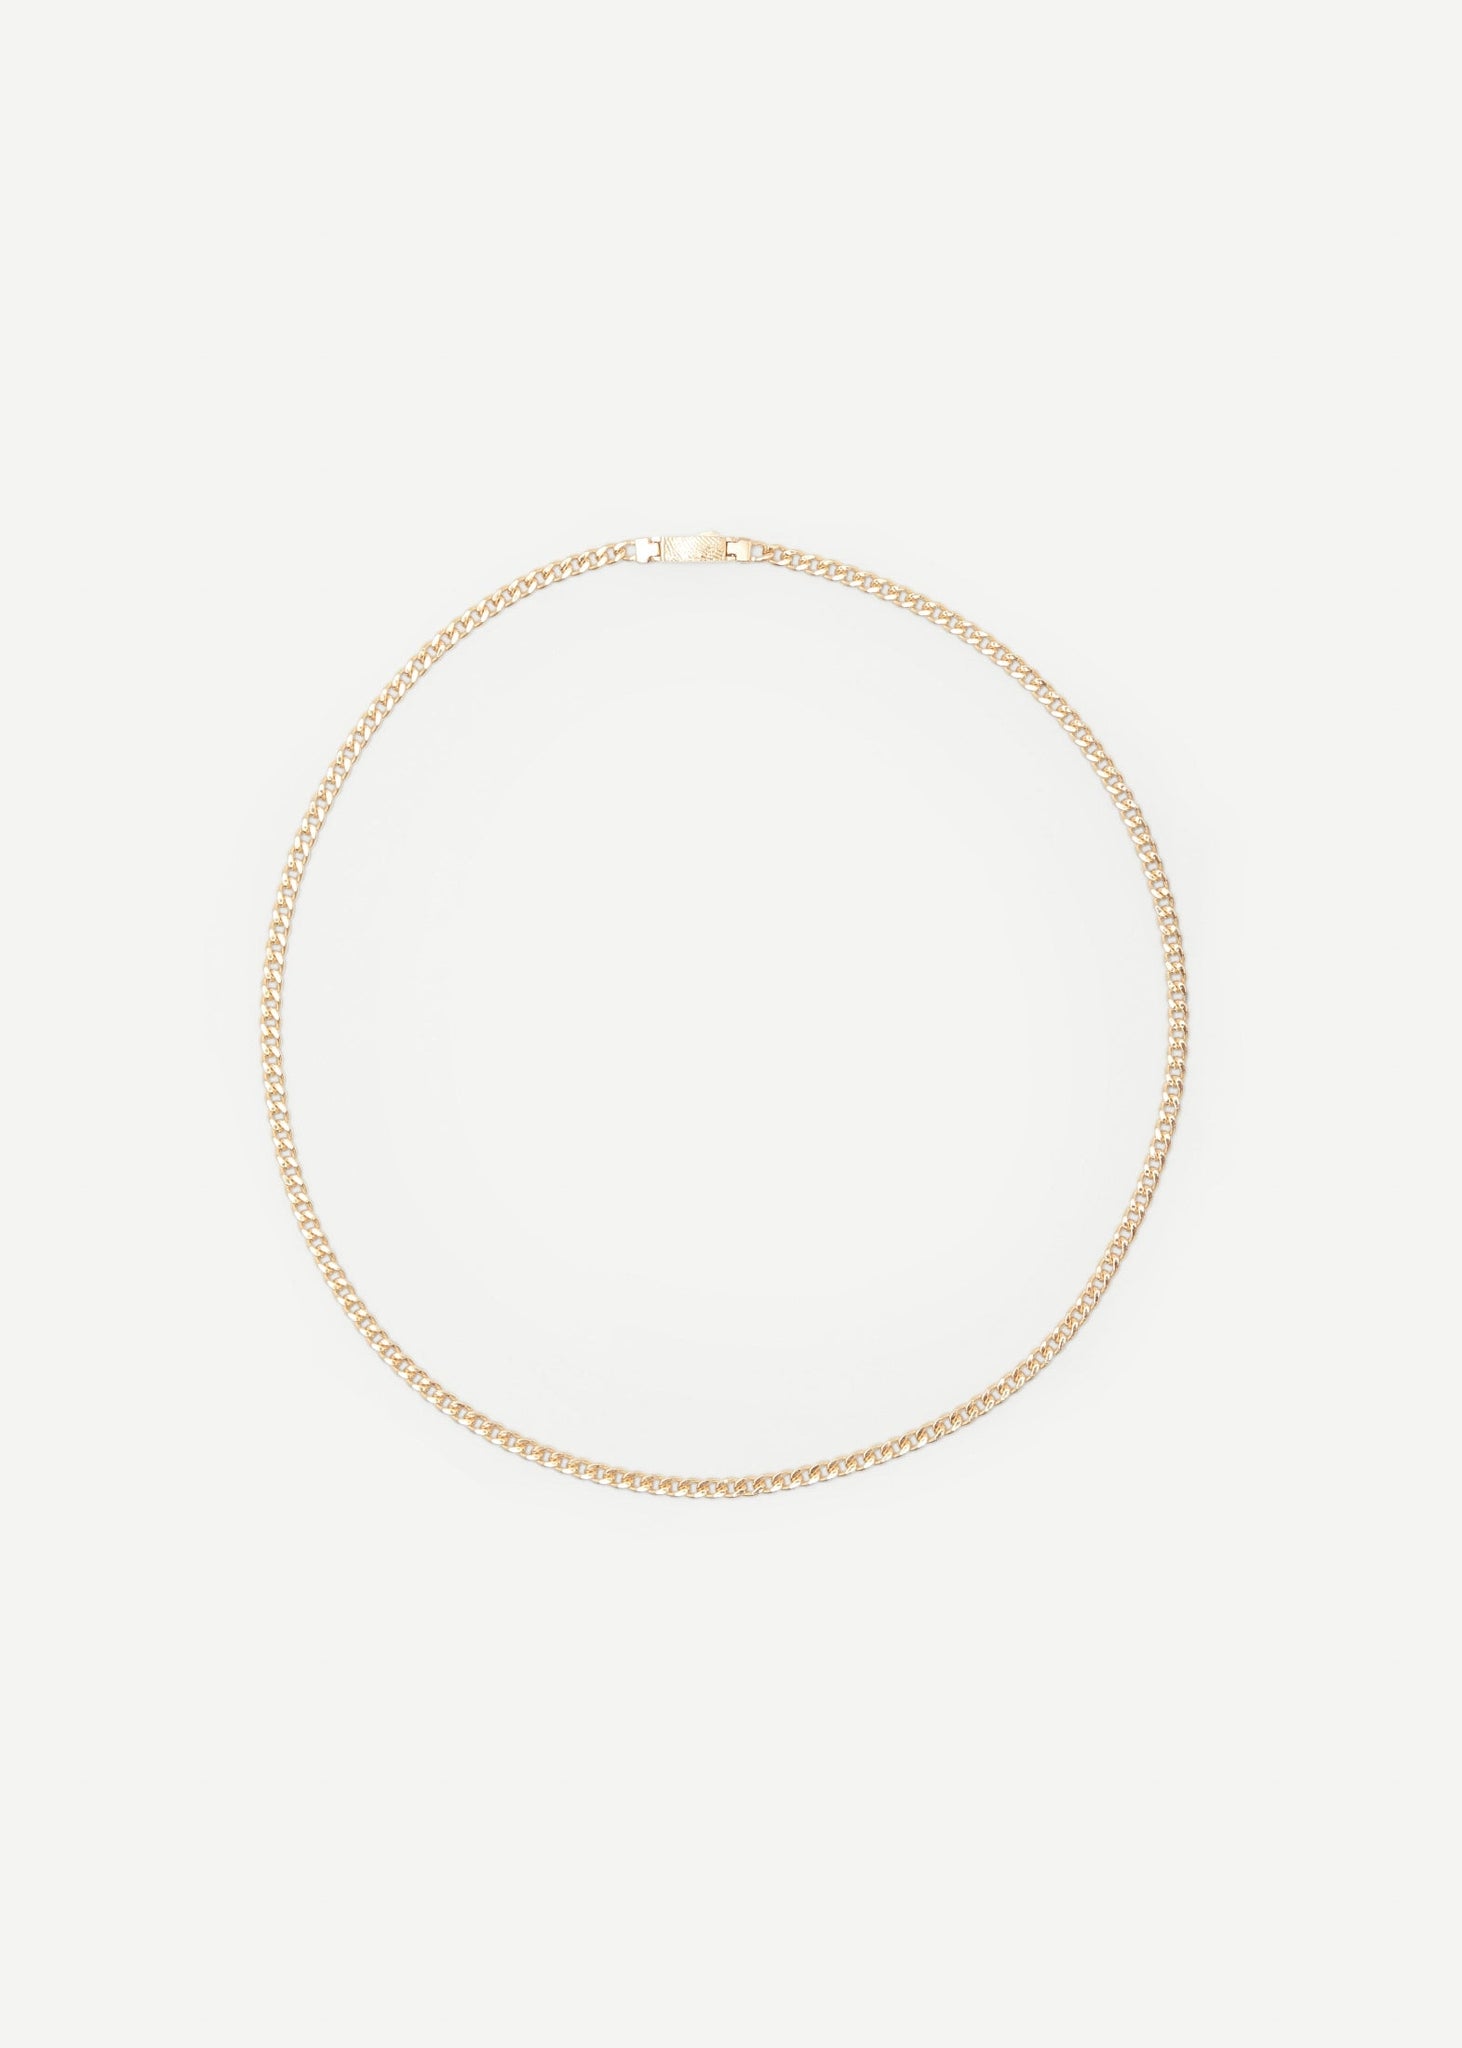 Molded Chained Necklace Mini - Necklaces - Cornelia Webb - 1